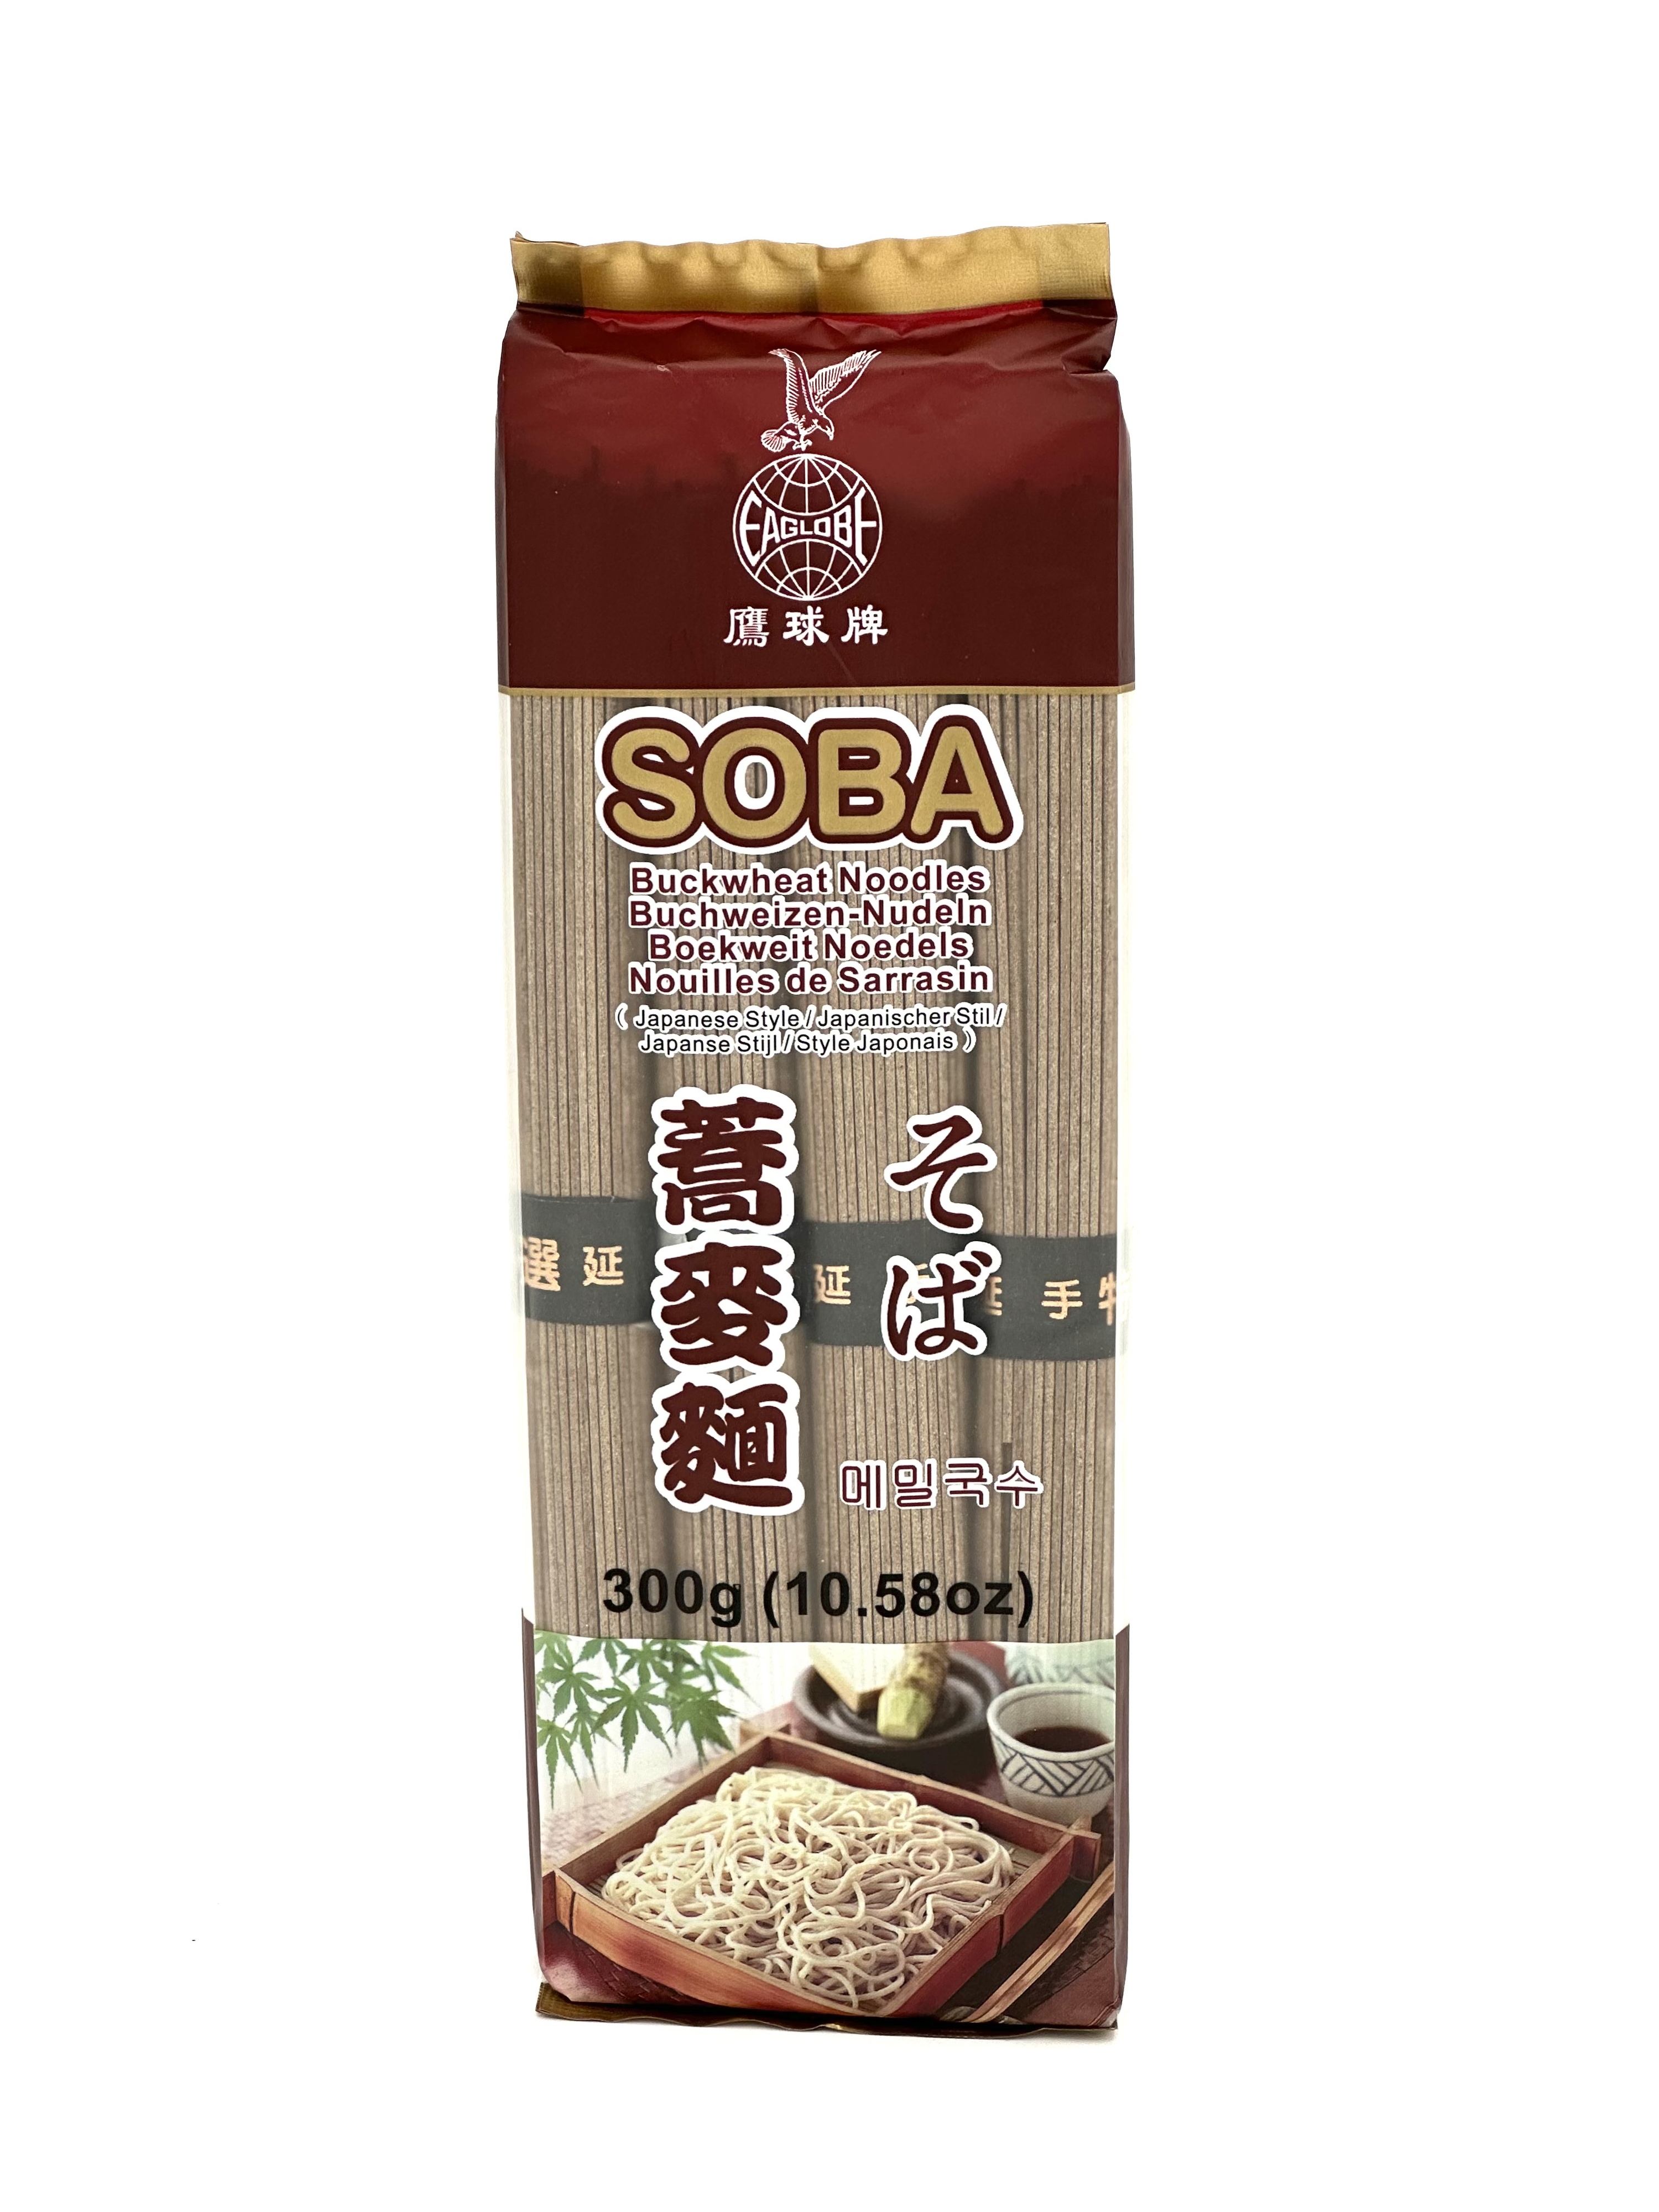 Soba buckwheat noodles 300g